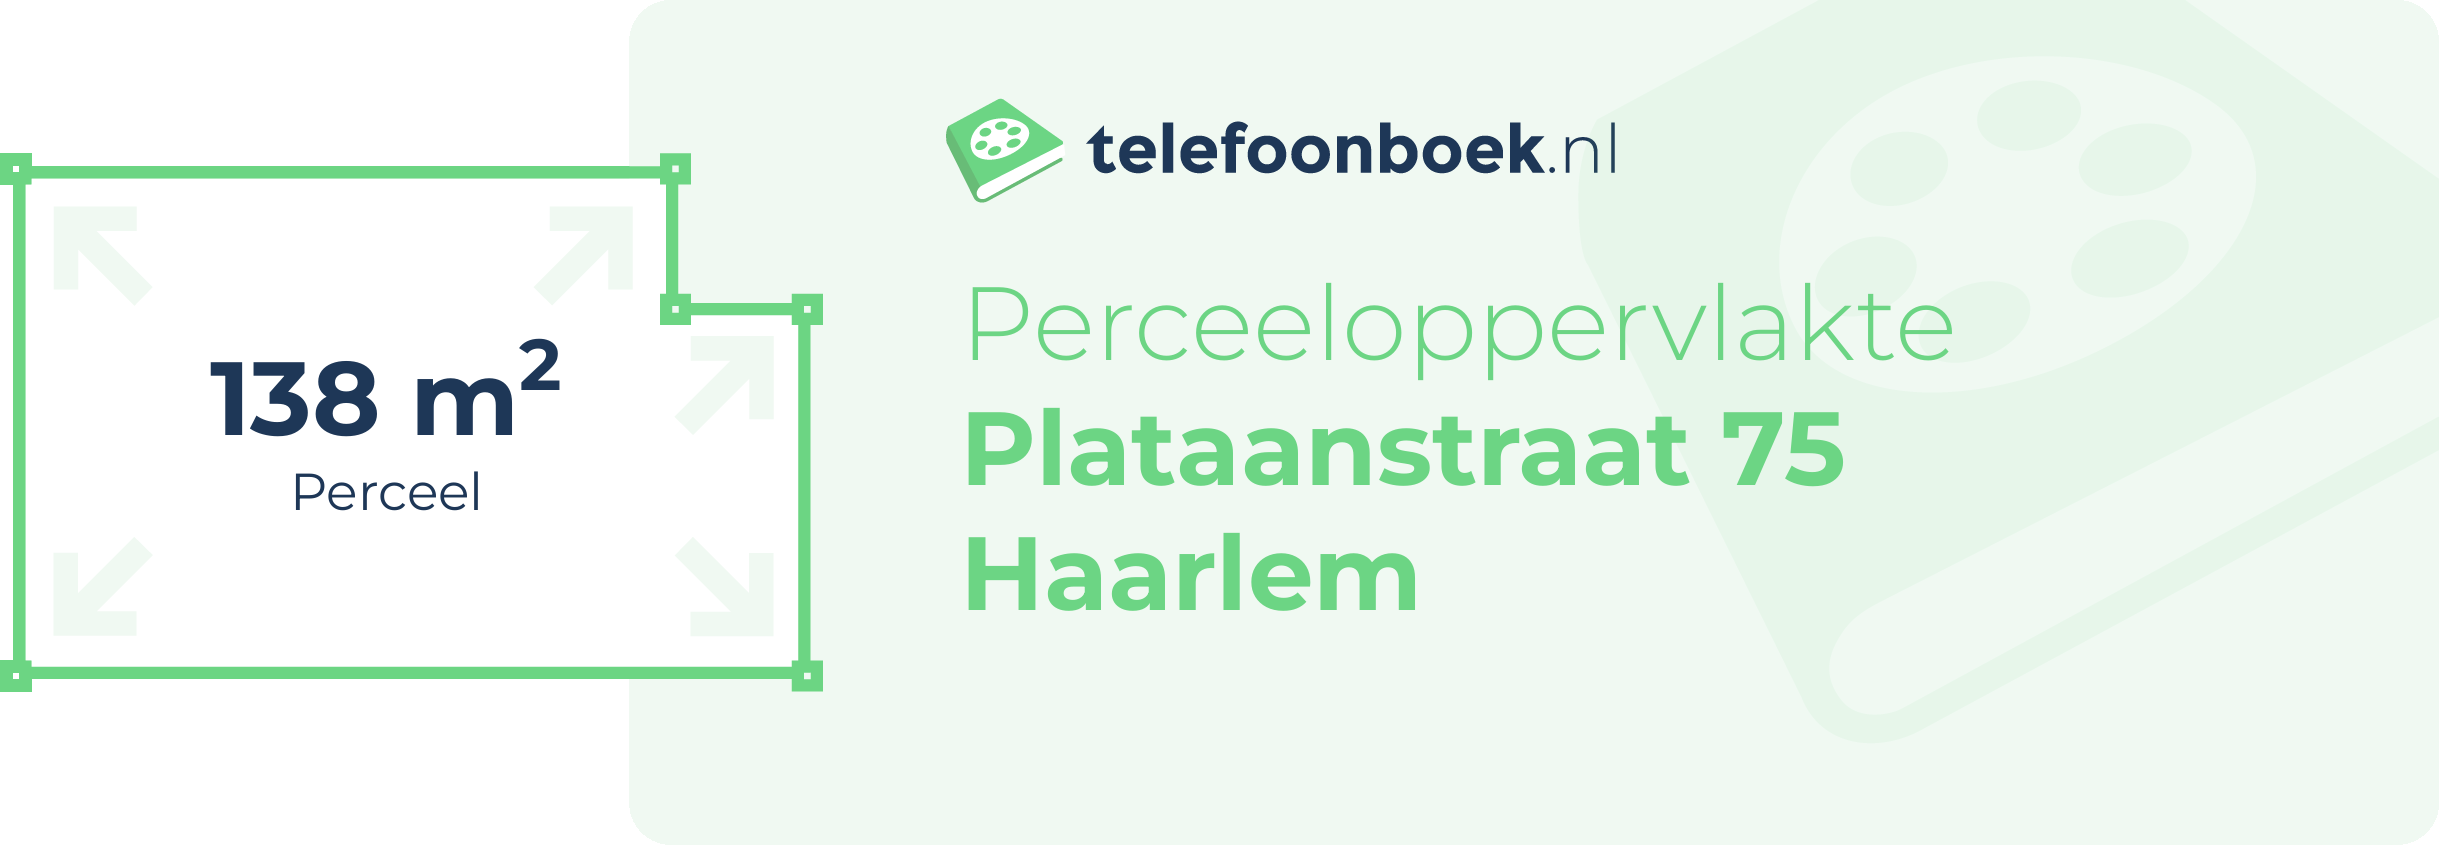 Perceeloppervlakte Plataanstraat 75 Haarlem